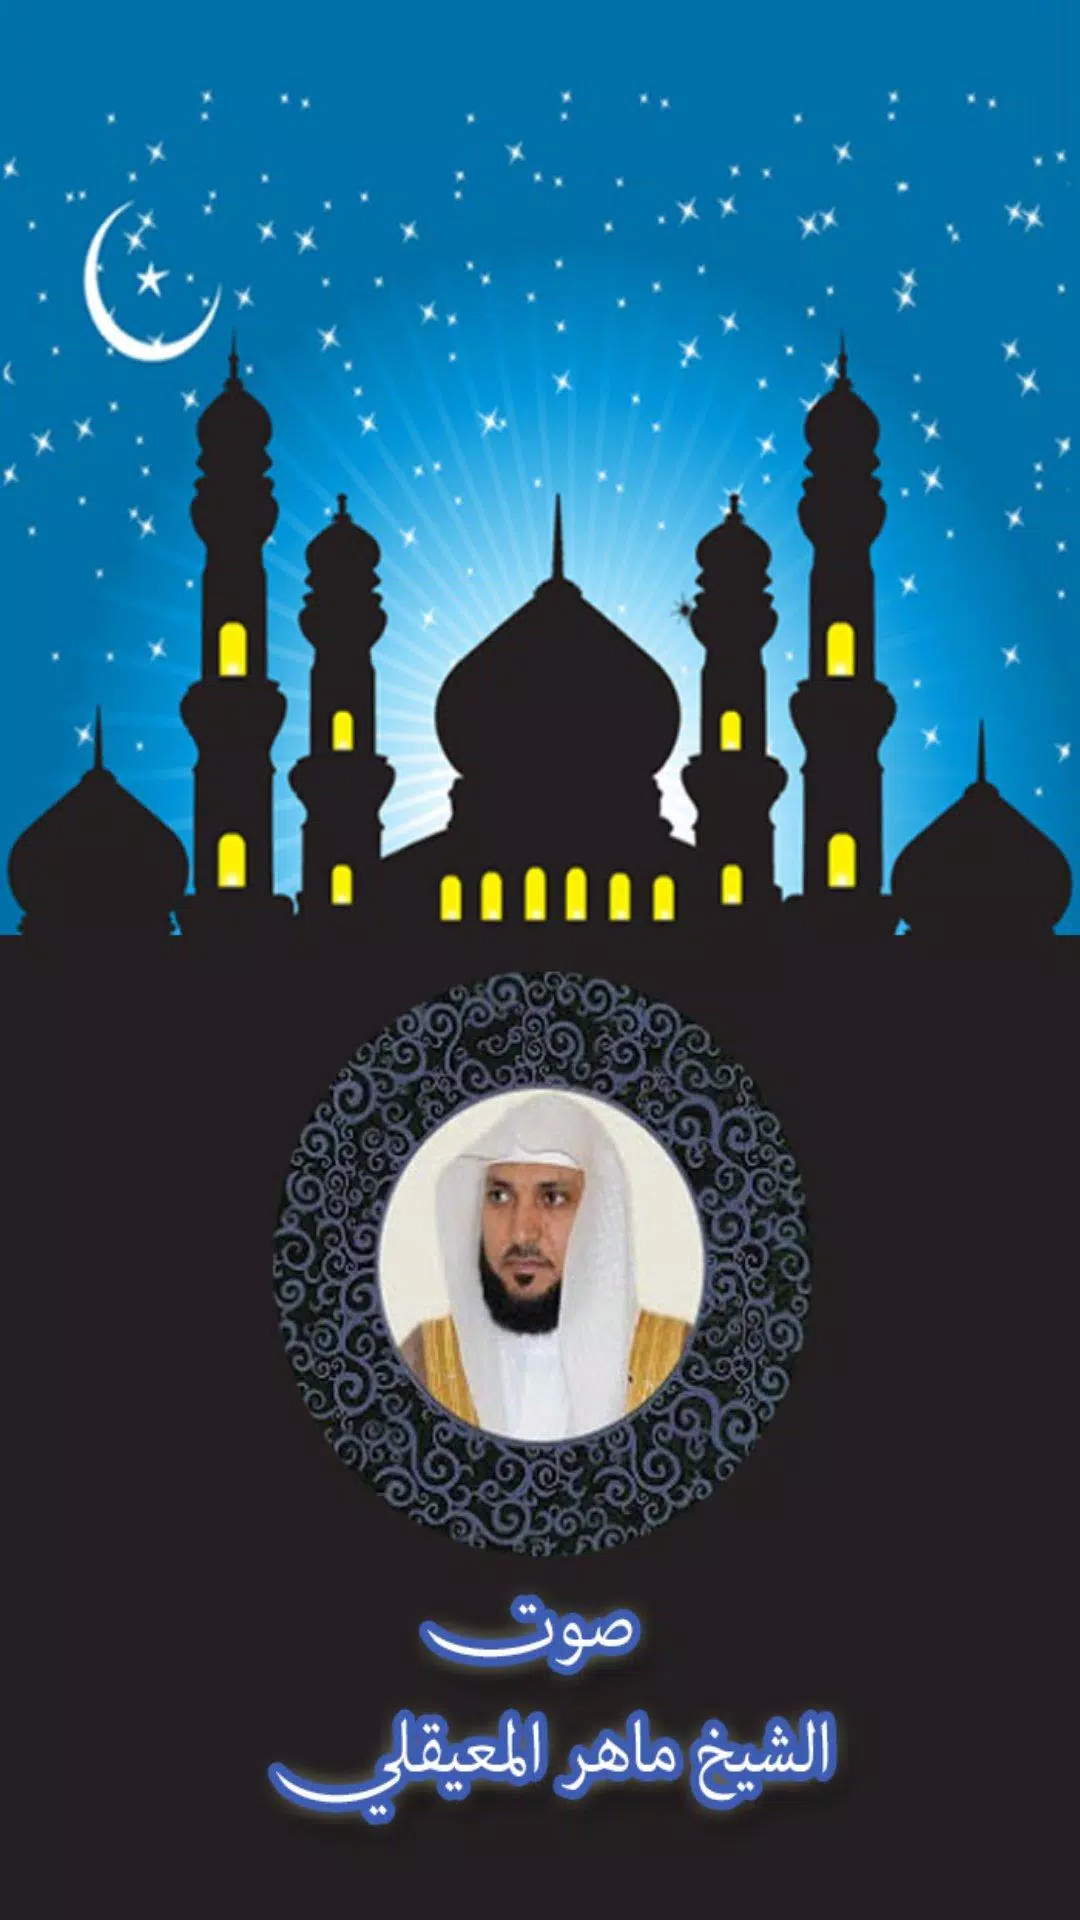 Maher Al Mueaqly Offline MP3 الشيخ ماهر المعيقلي APK for Android Download